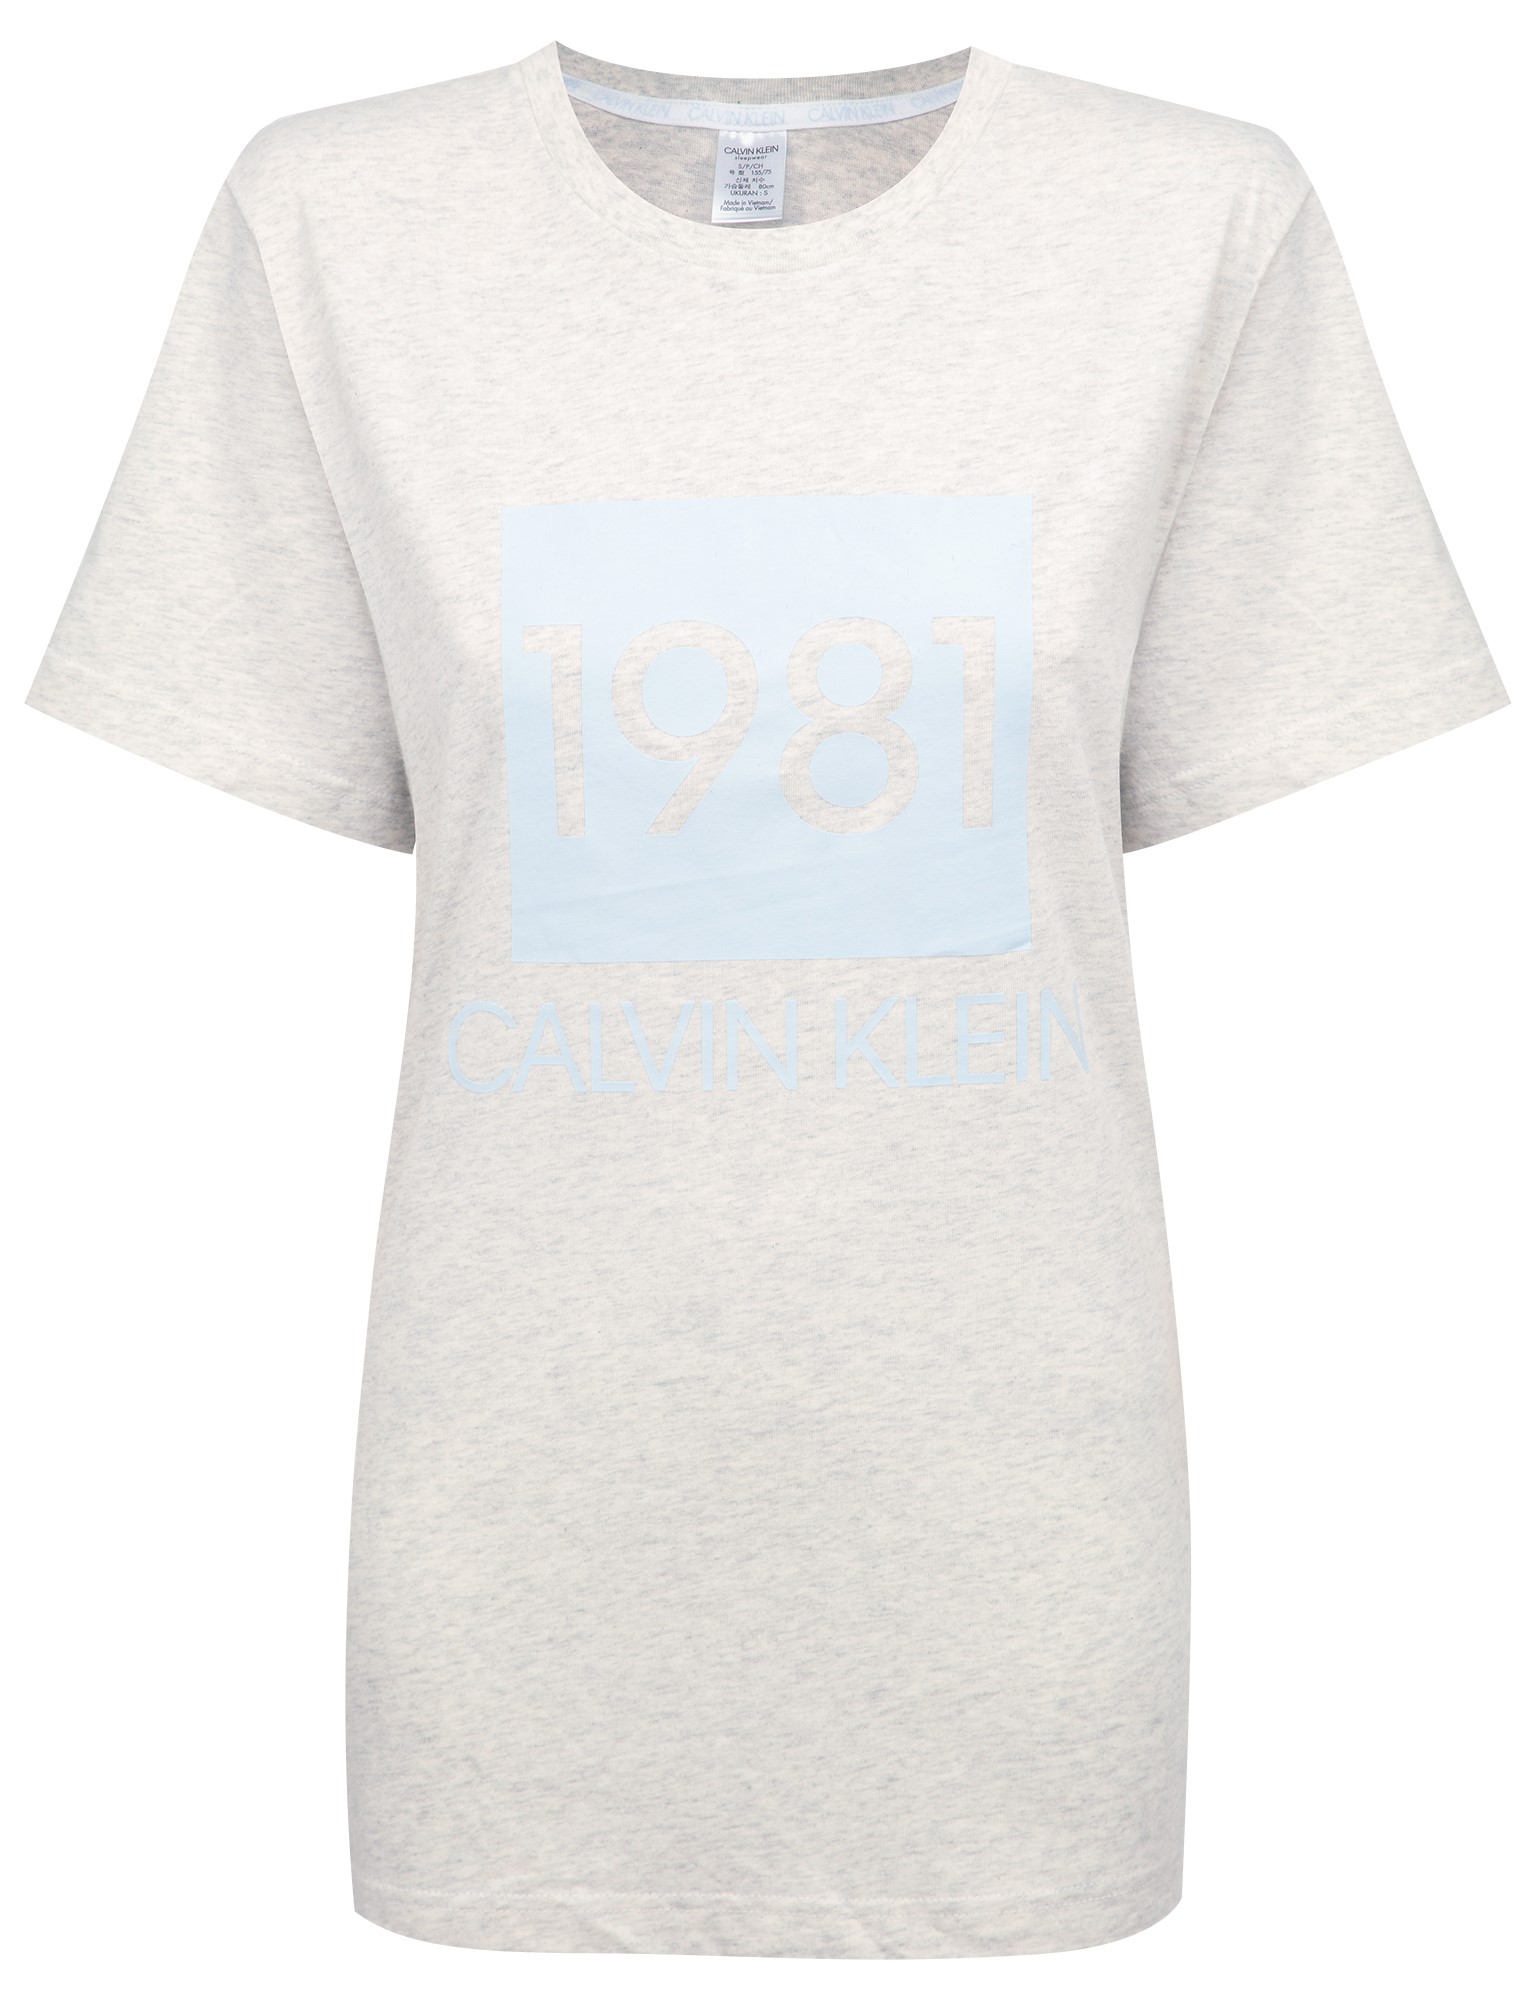 Calvin Klein šedé dámské tričko S/S Crew Neck s logem 1981